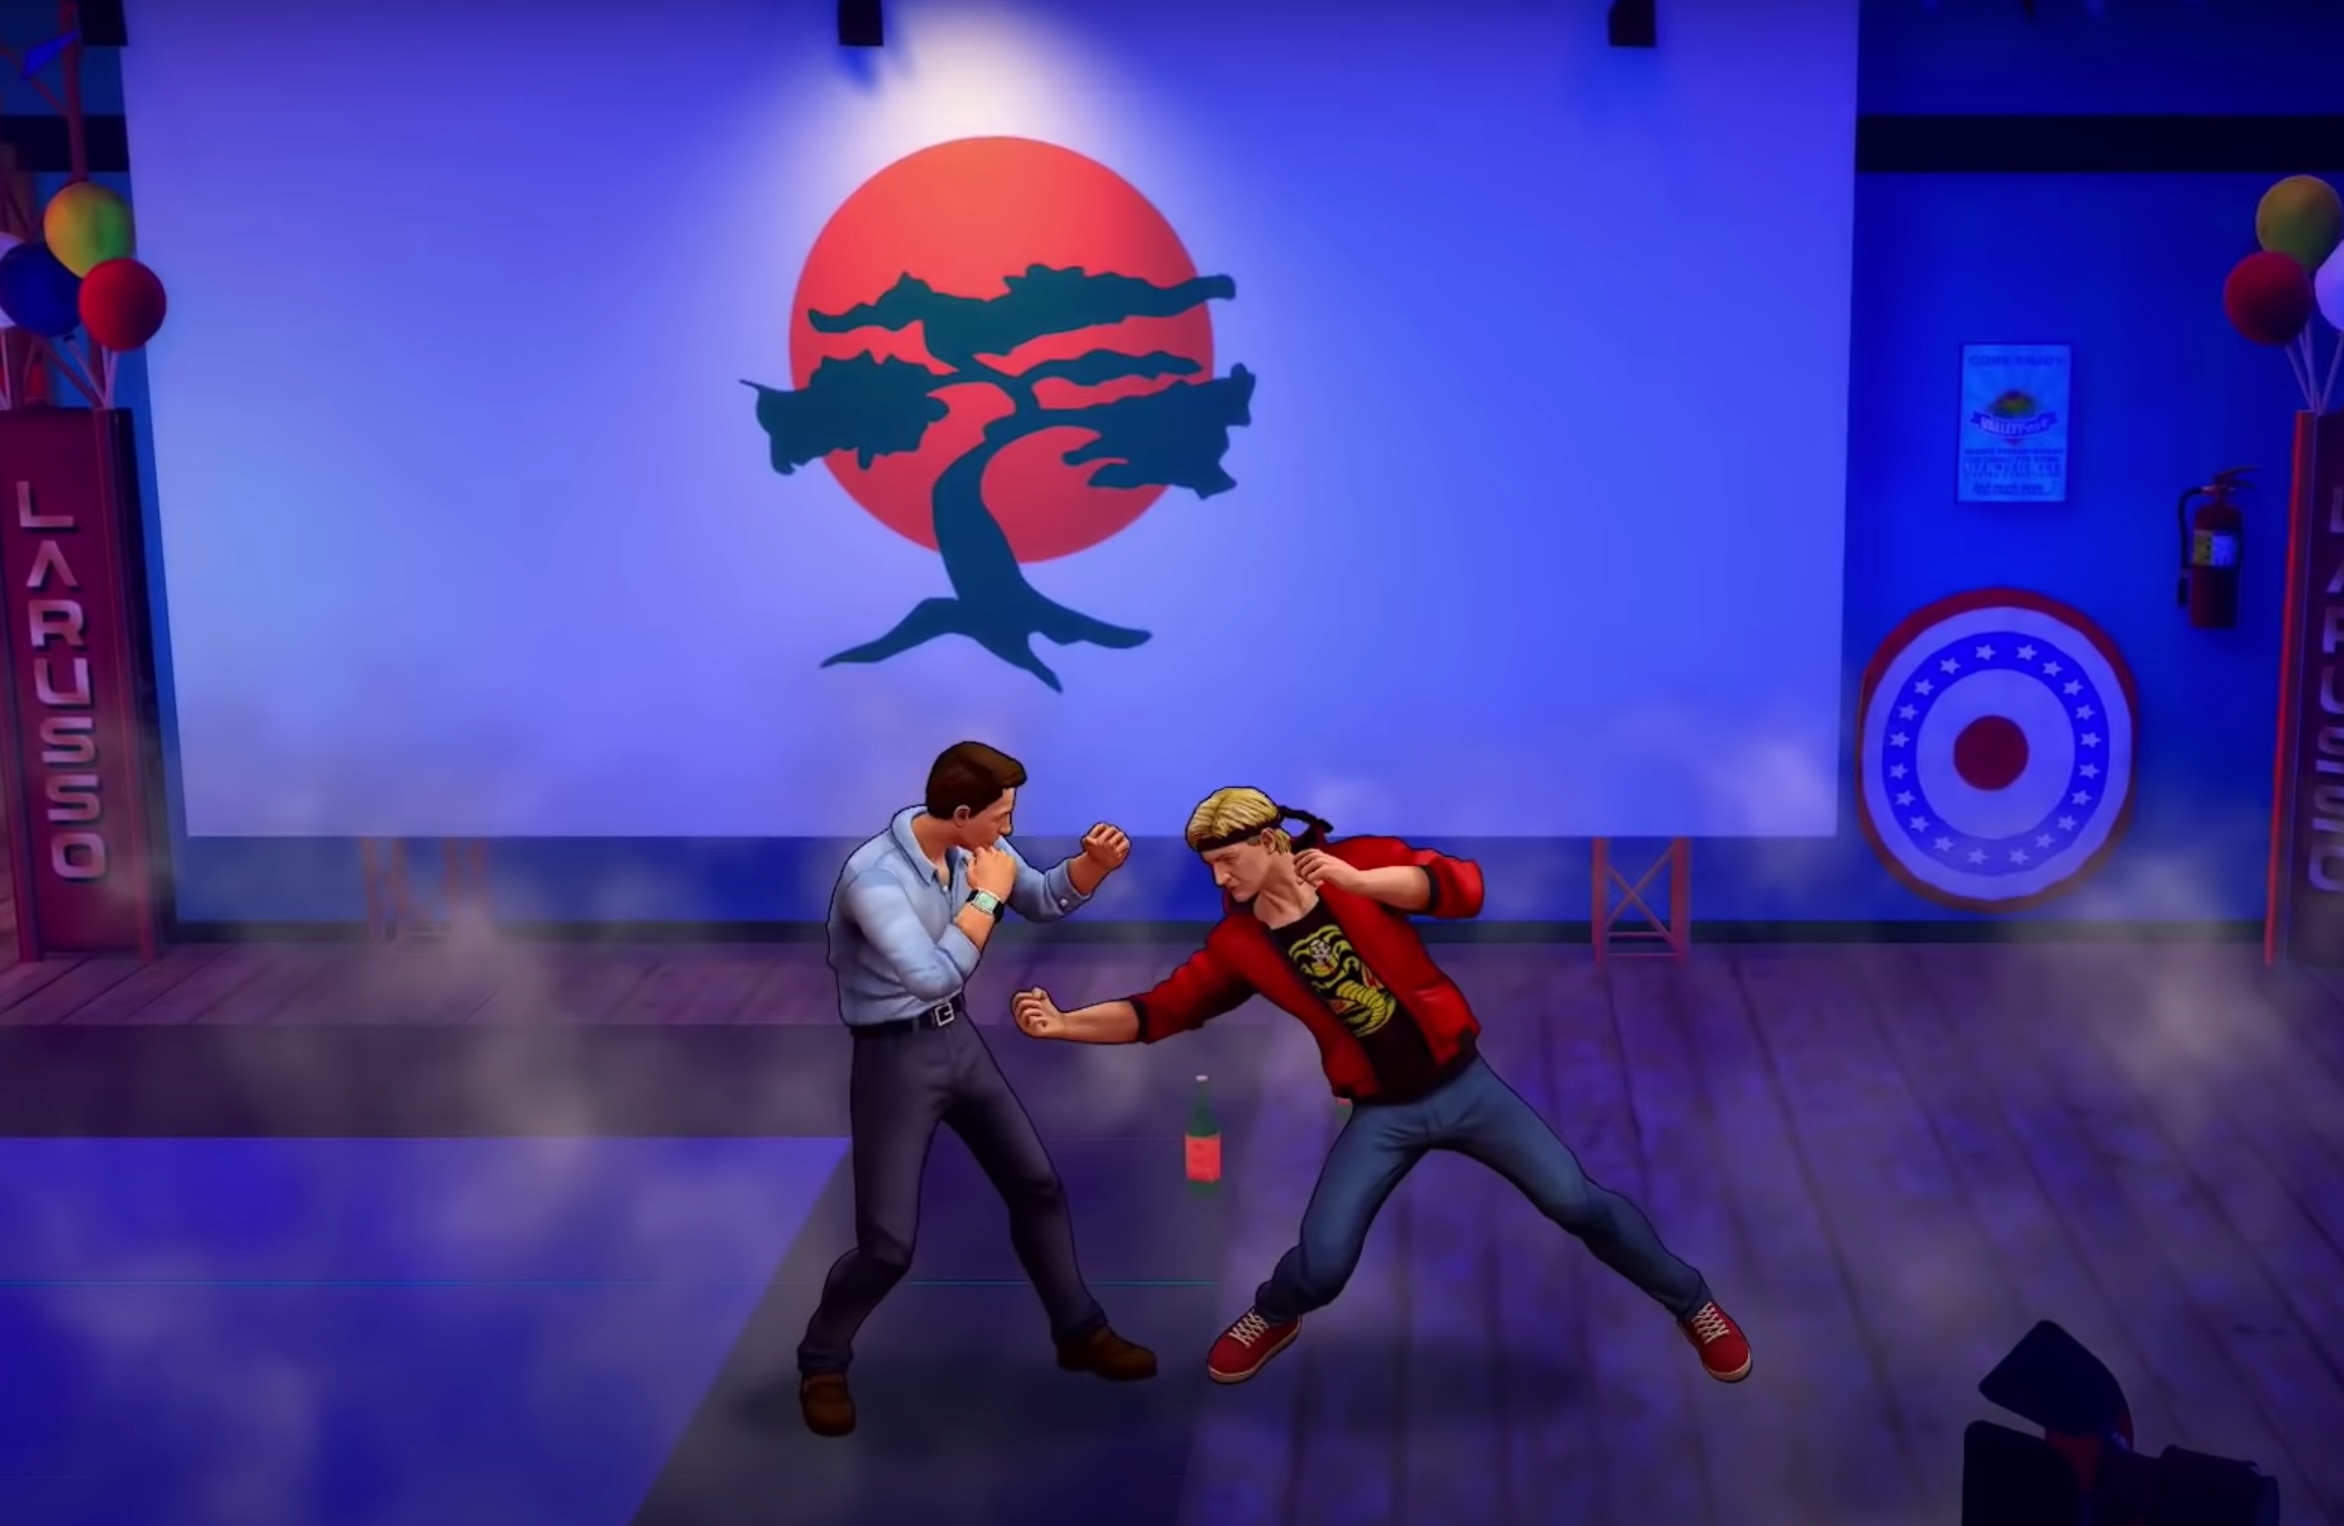 Screenshot from Cobrai Kai: The Karate Kid Saga Continues game trailer